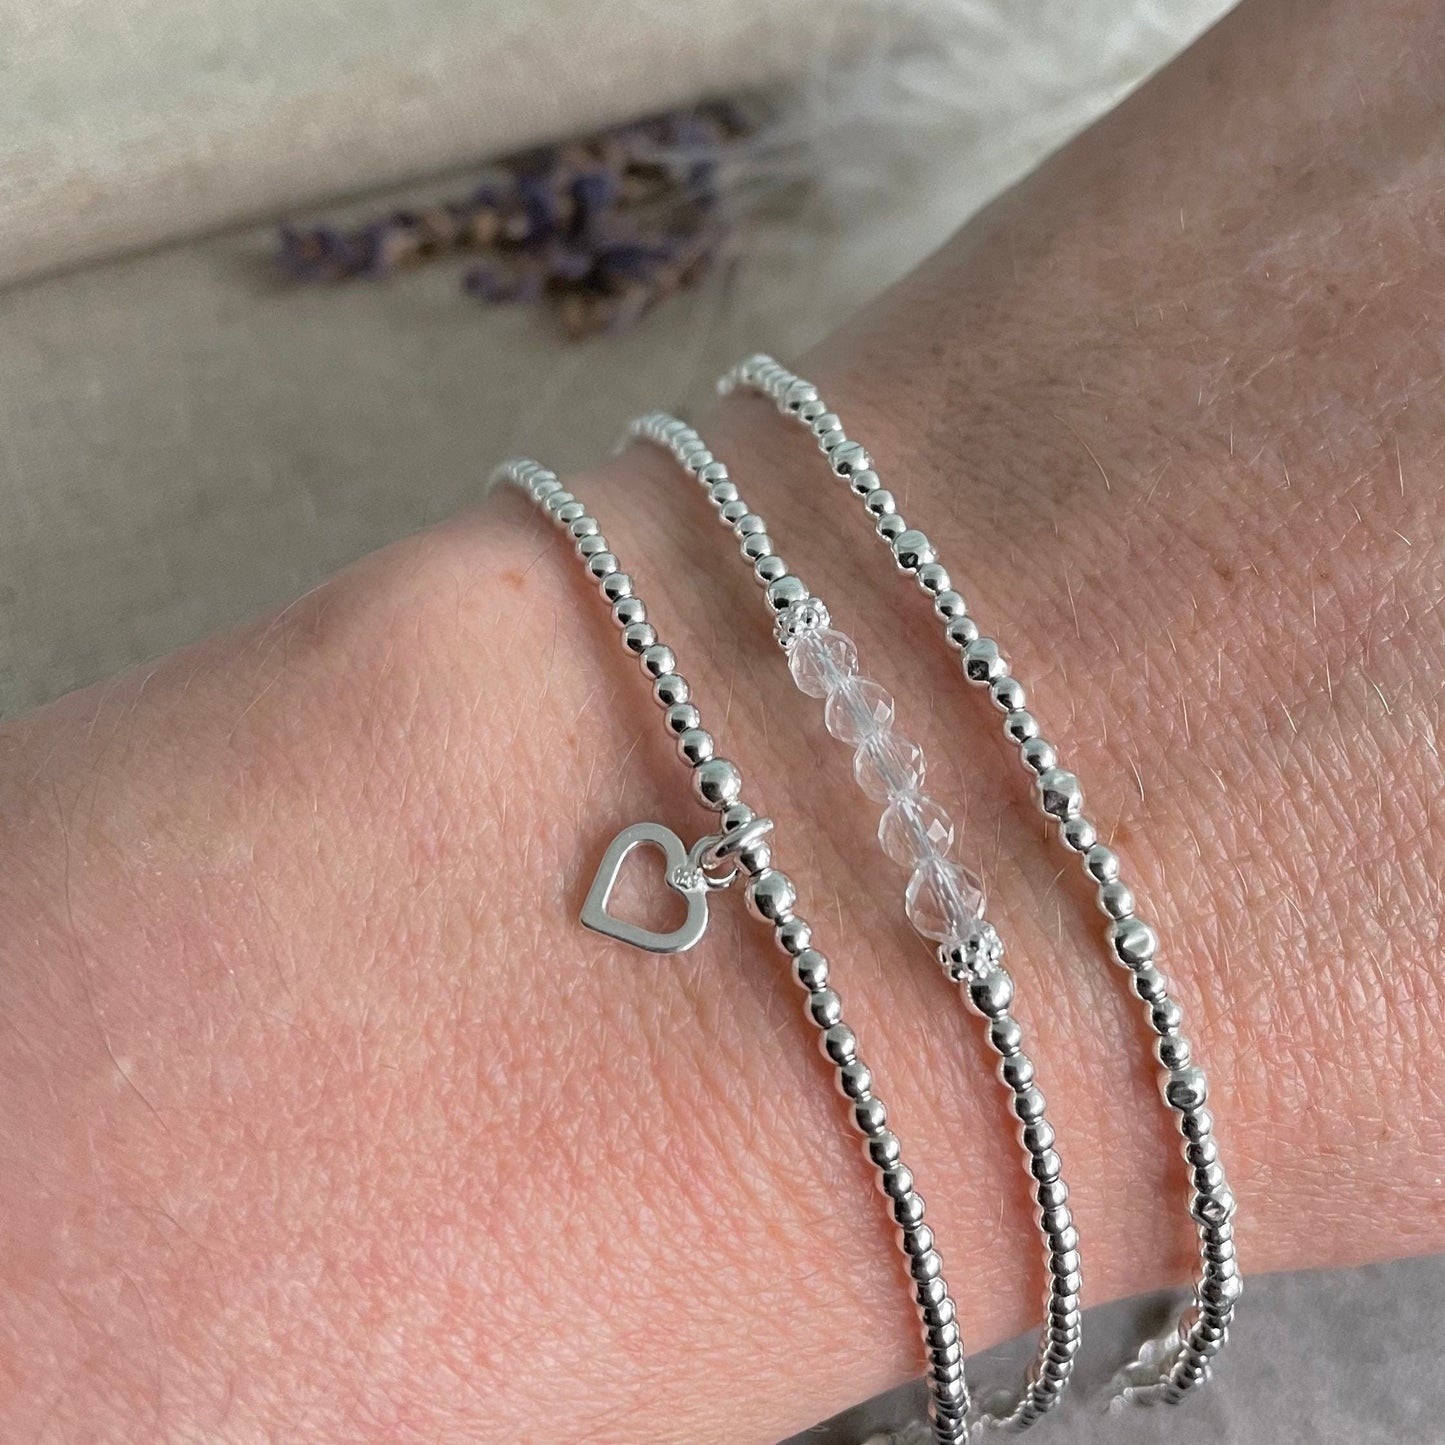 A Dainty April Birthstone Rock Quartz Bracelet Set, April Stacking Bracelets for Women in Sterling Silver